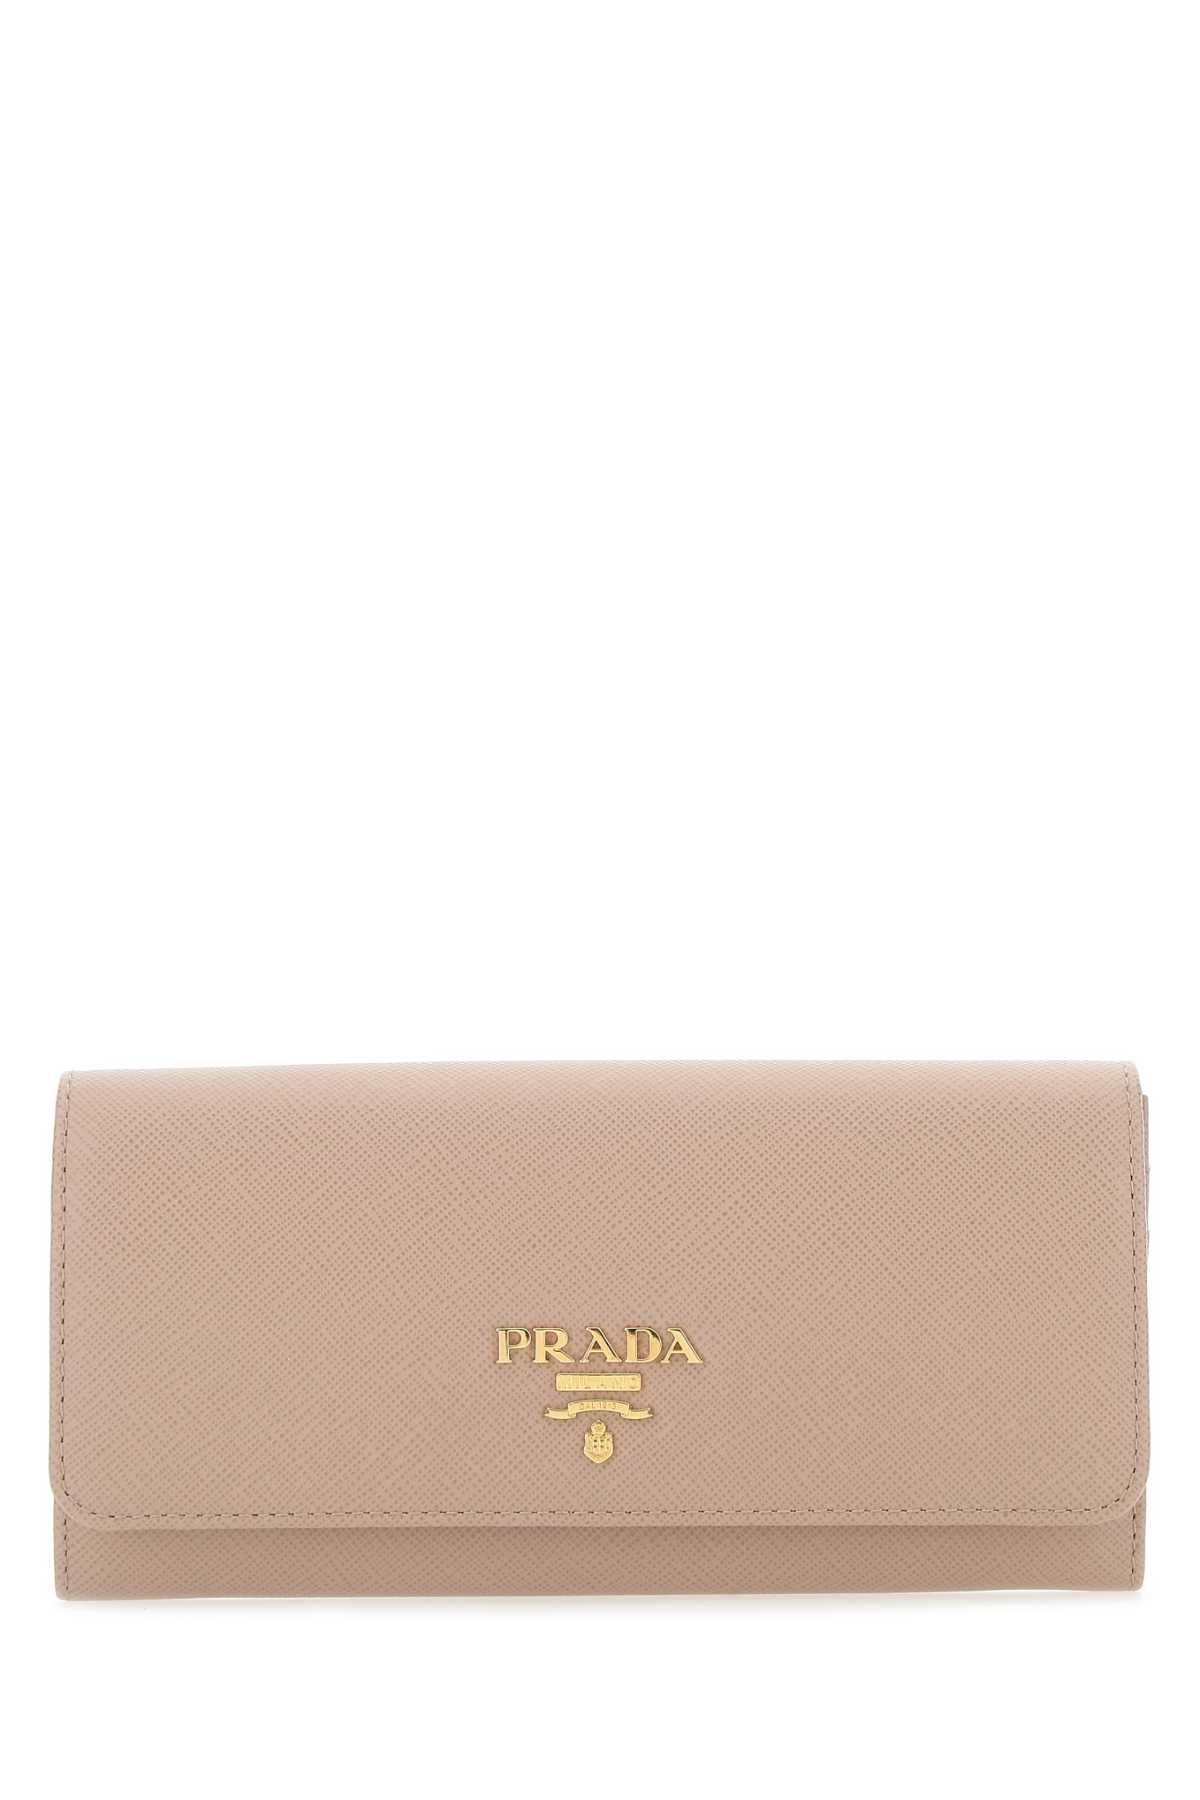 Shop Prada Powder Pink Leather Wallet In F0236